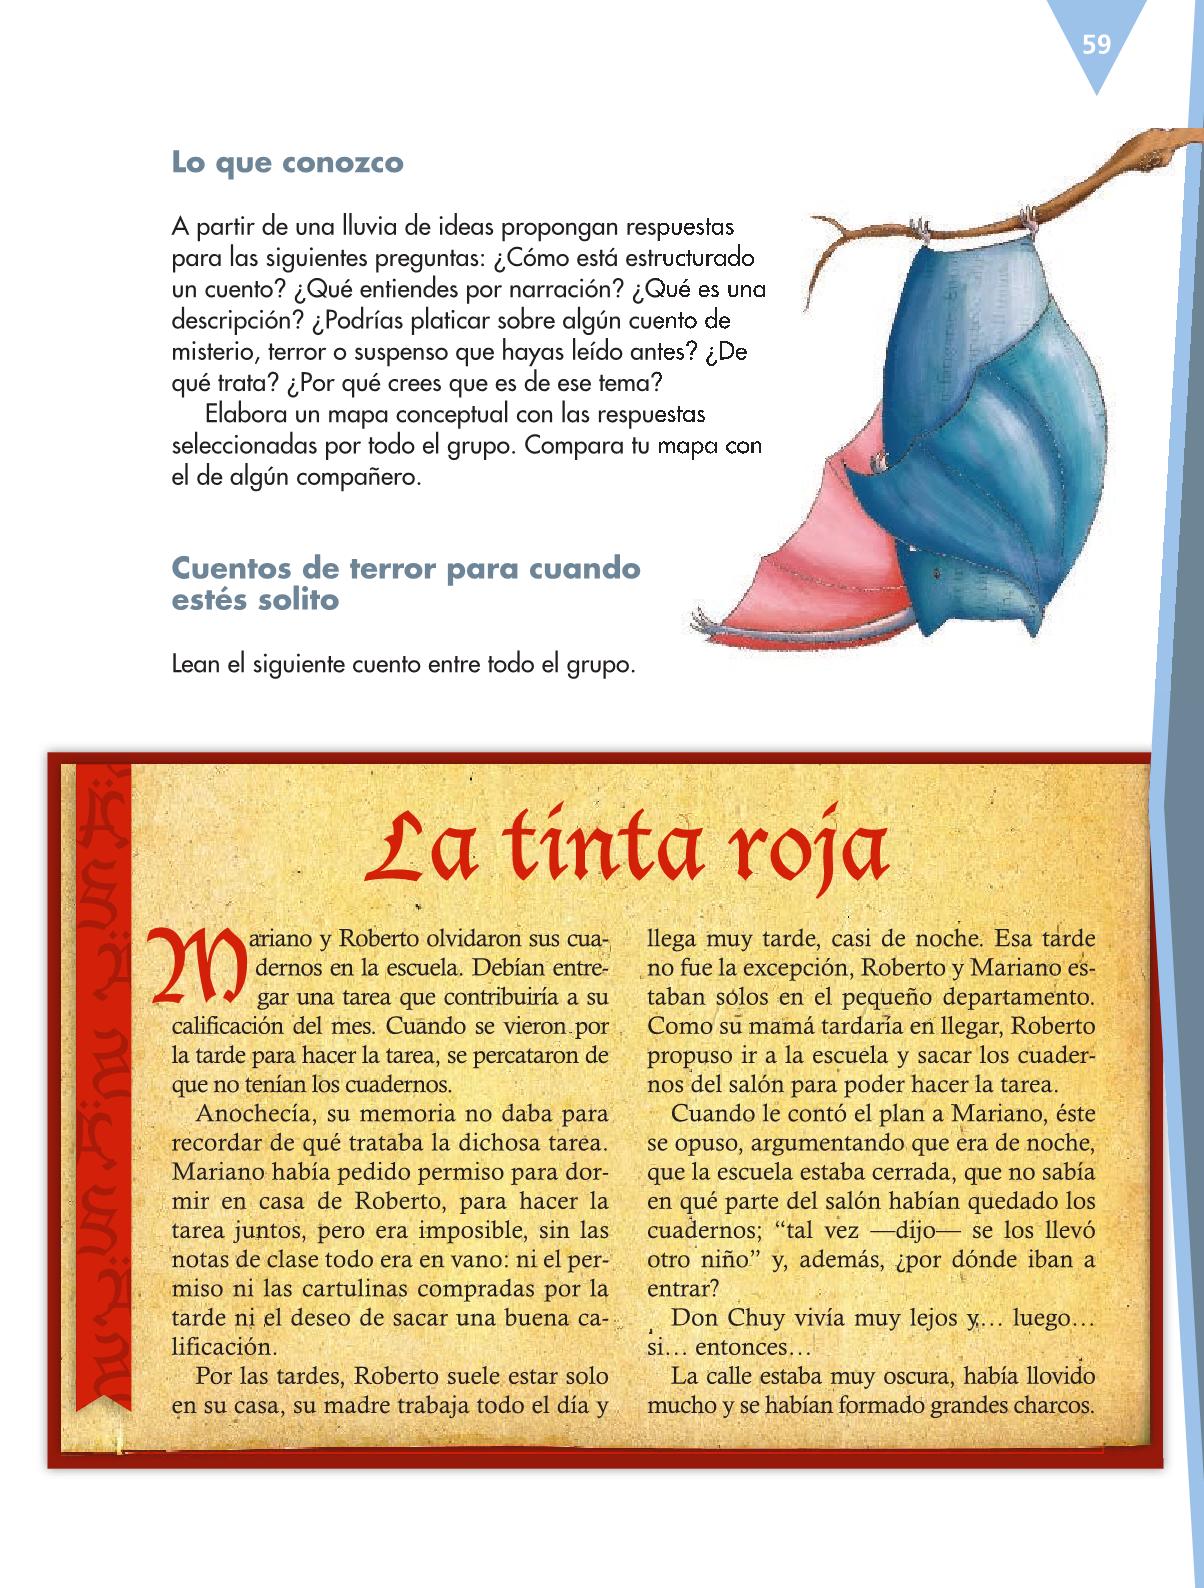 Español Sexto grado 2016-2017 - Online - Página 59 de 184 ...